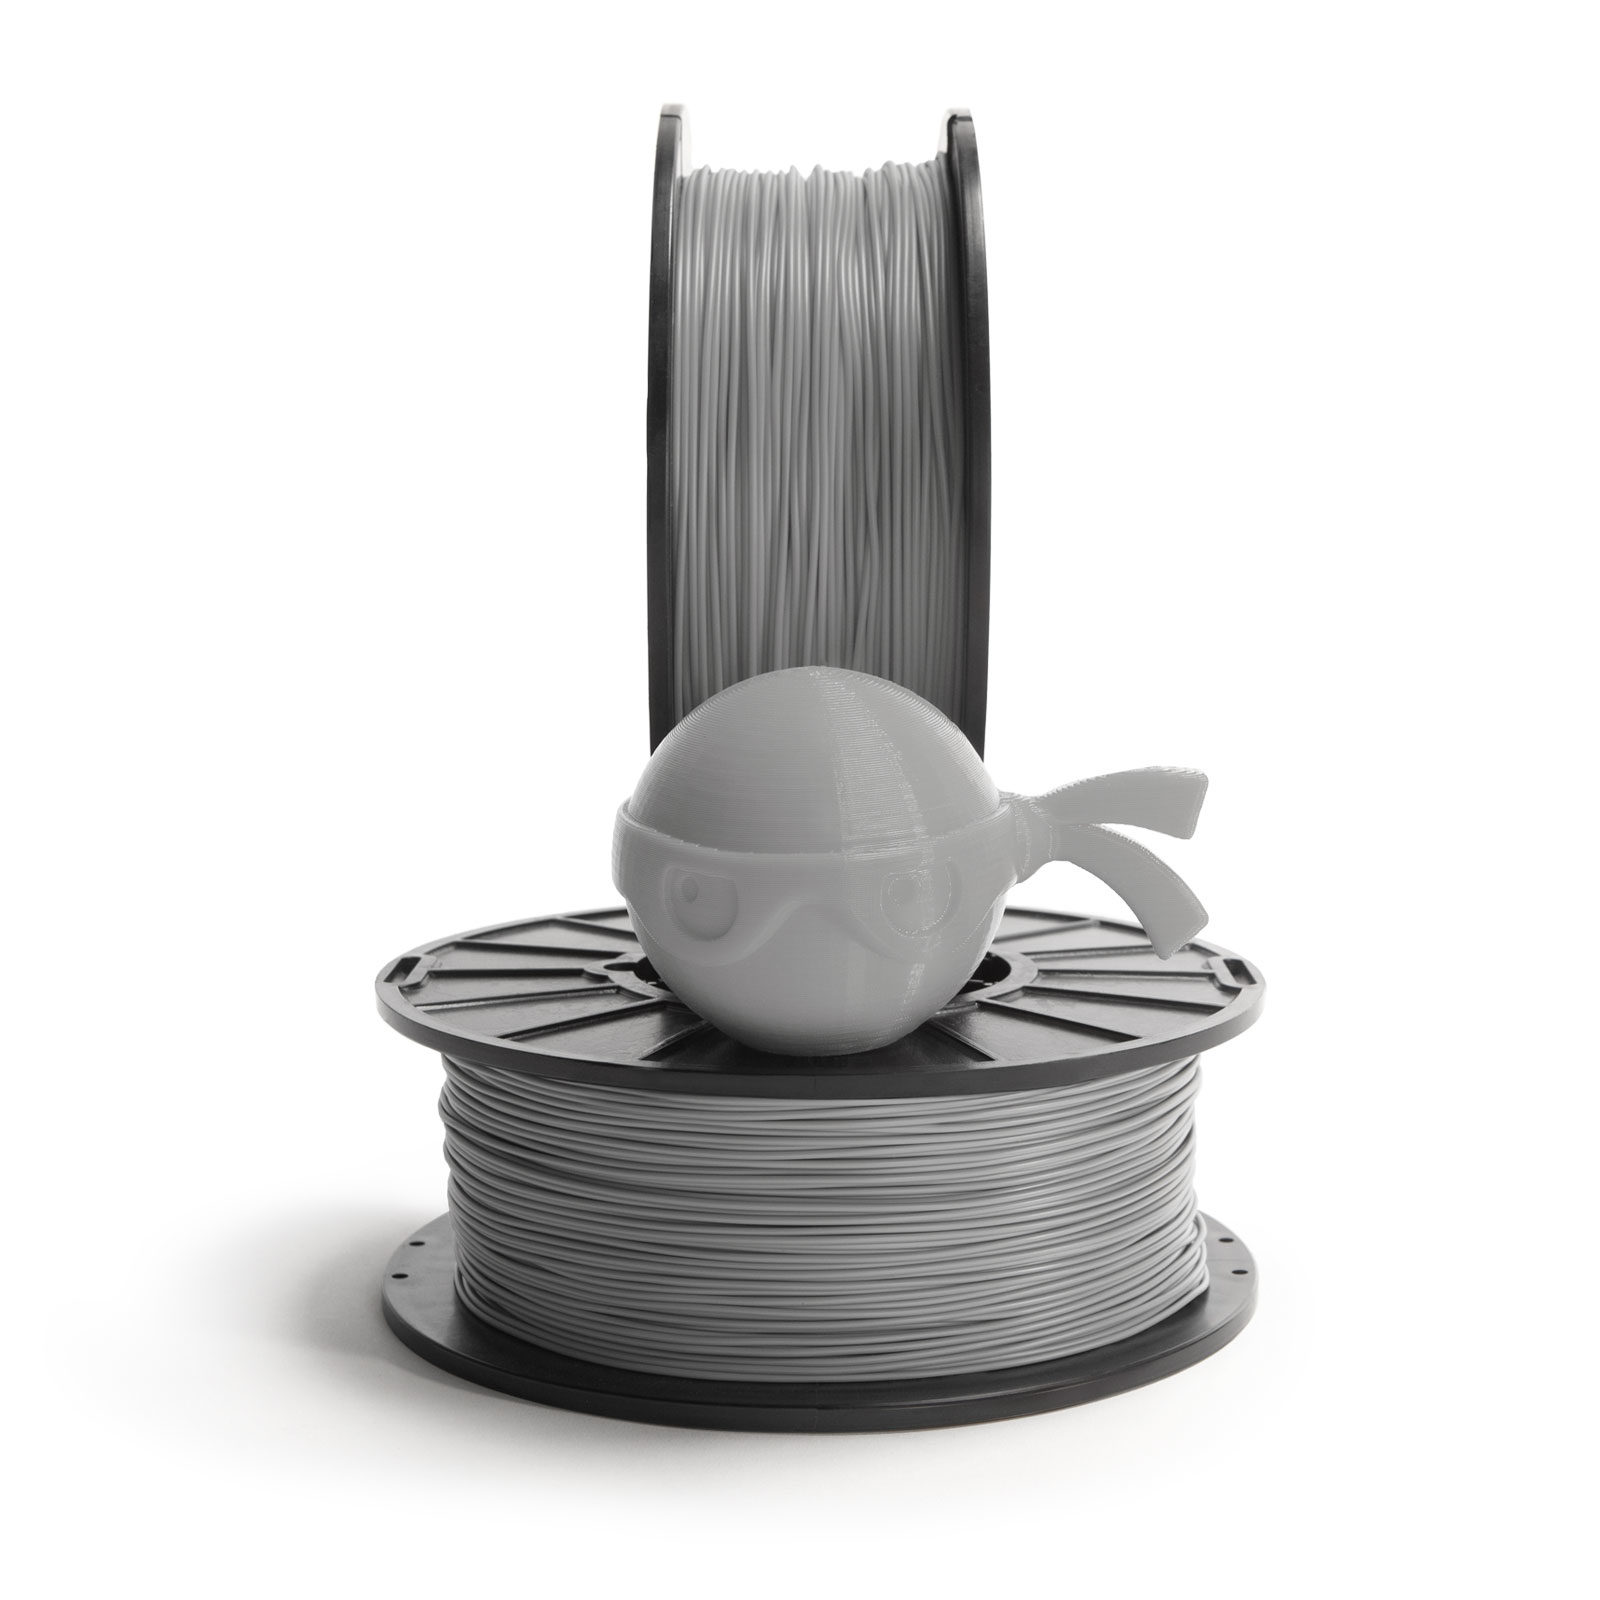 NinjaFlex 85A TPU Steel 3mm Flexible 3D Printer Filament 500gms